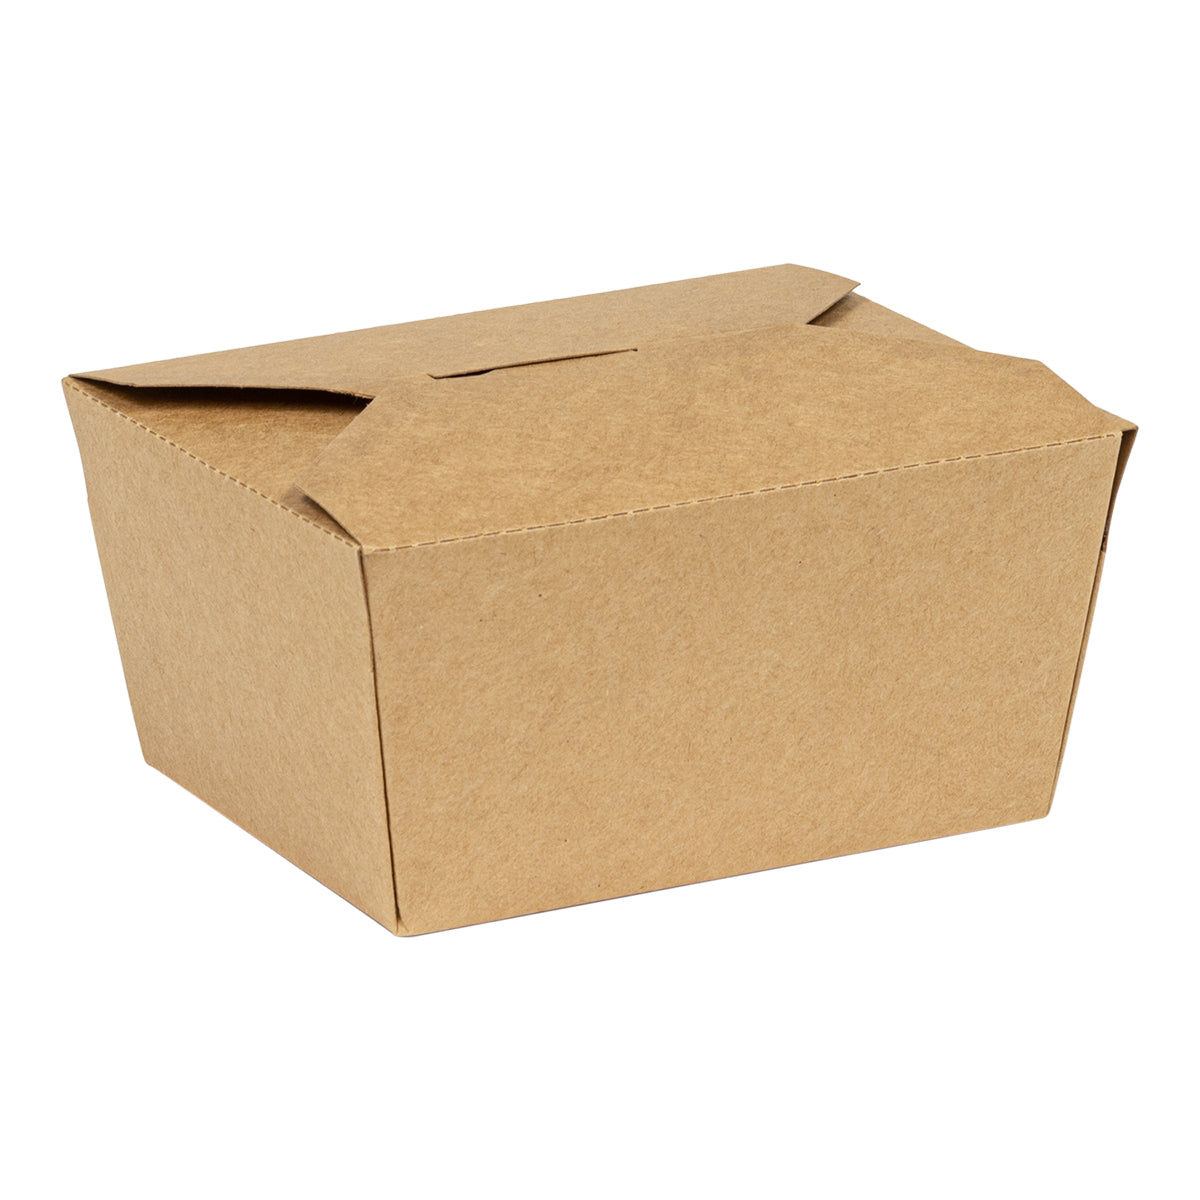 Eco Tek 78 oz Rectangle Kraft and Green Paper Bento Box - 3-Compartment,  Compostable - 11 x 9 x 2 - 100 count box